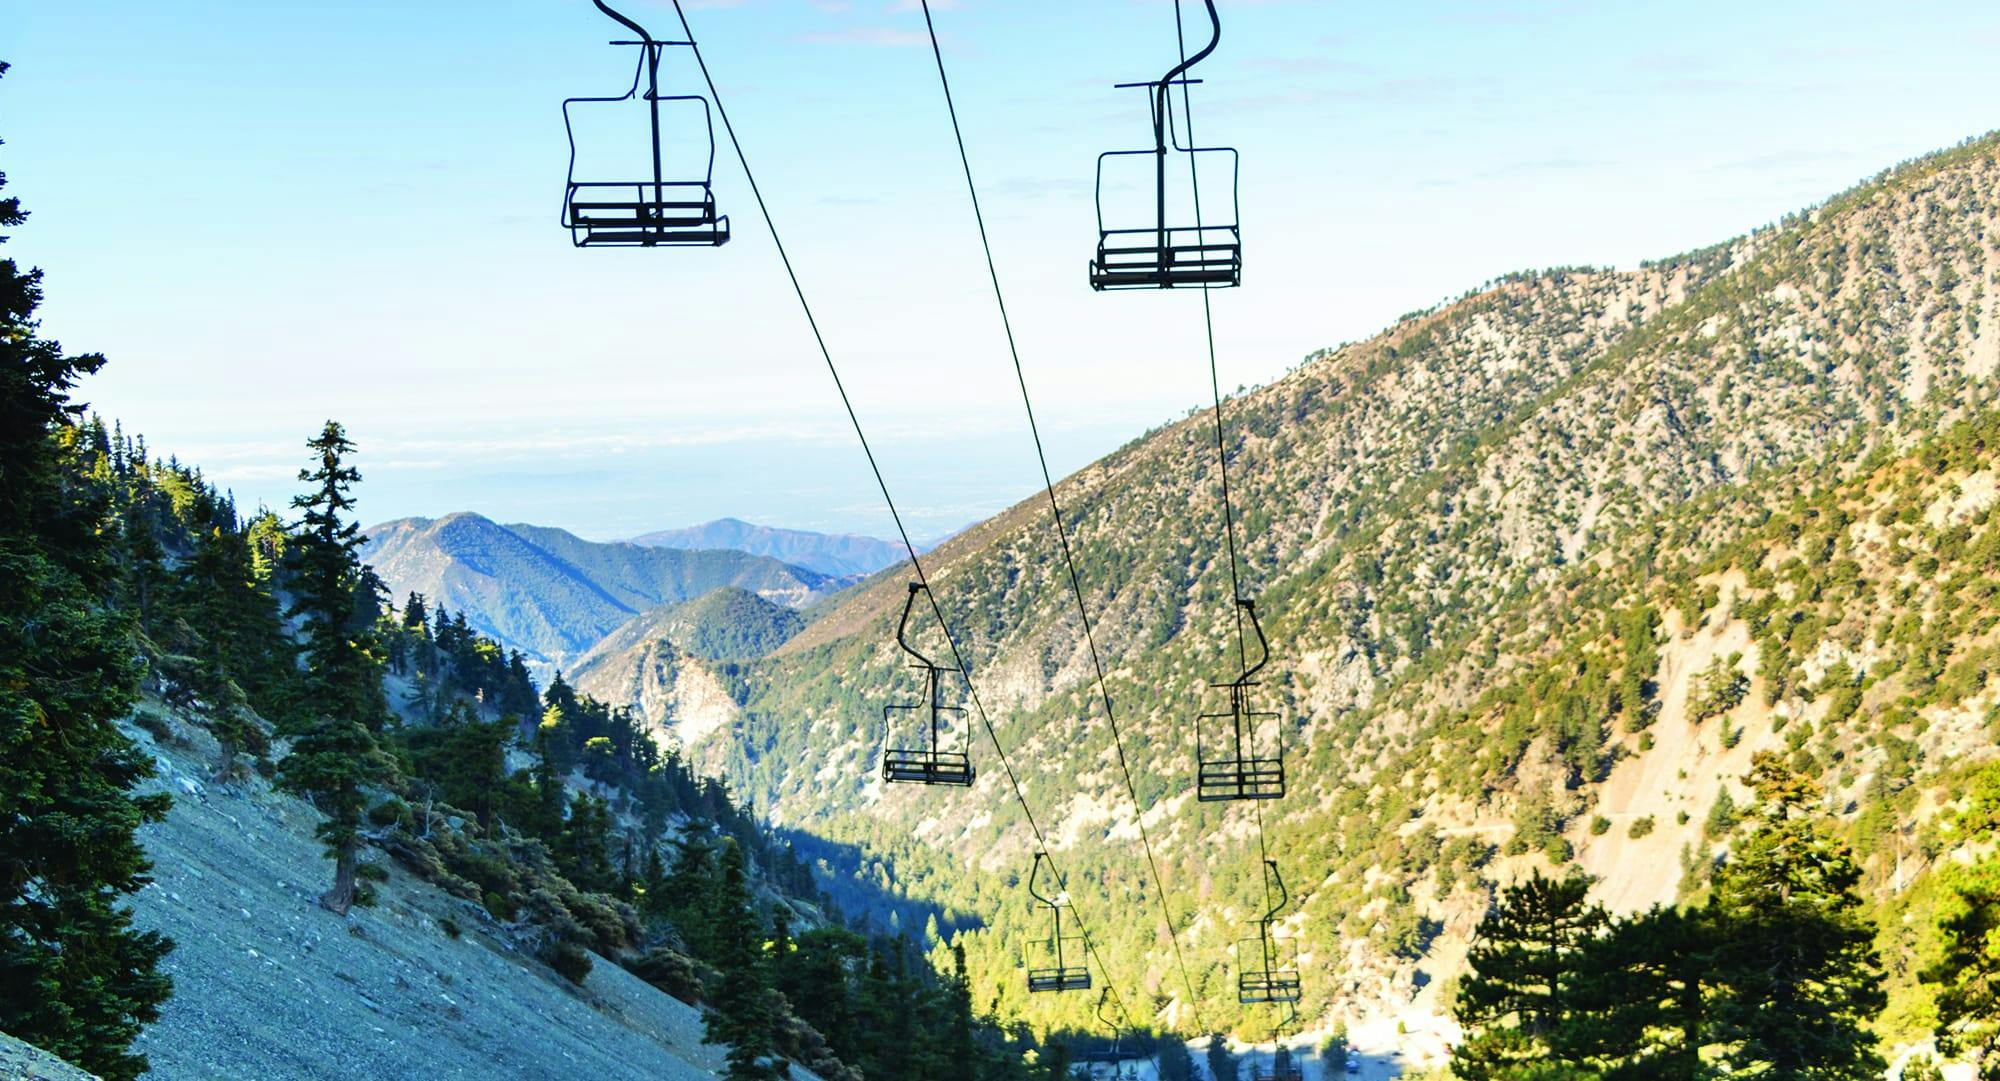 <p>Ride the Mount Baldy Ski Lifts</p>
